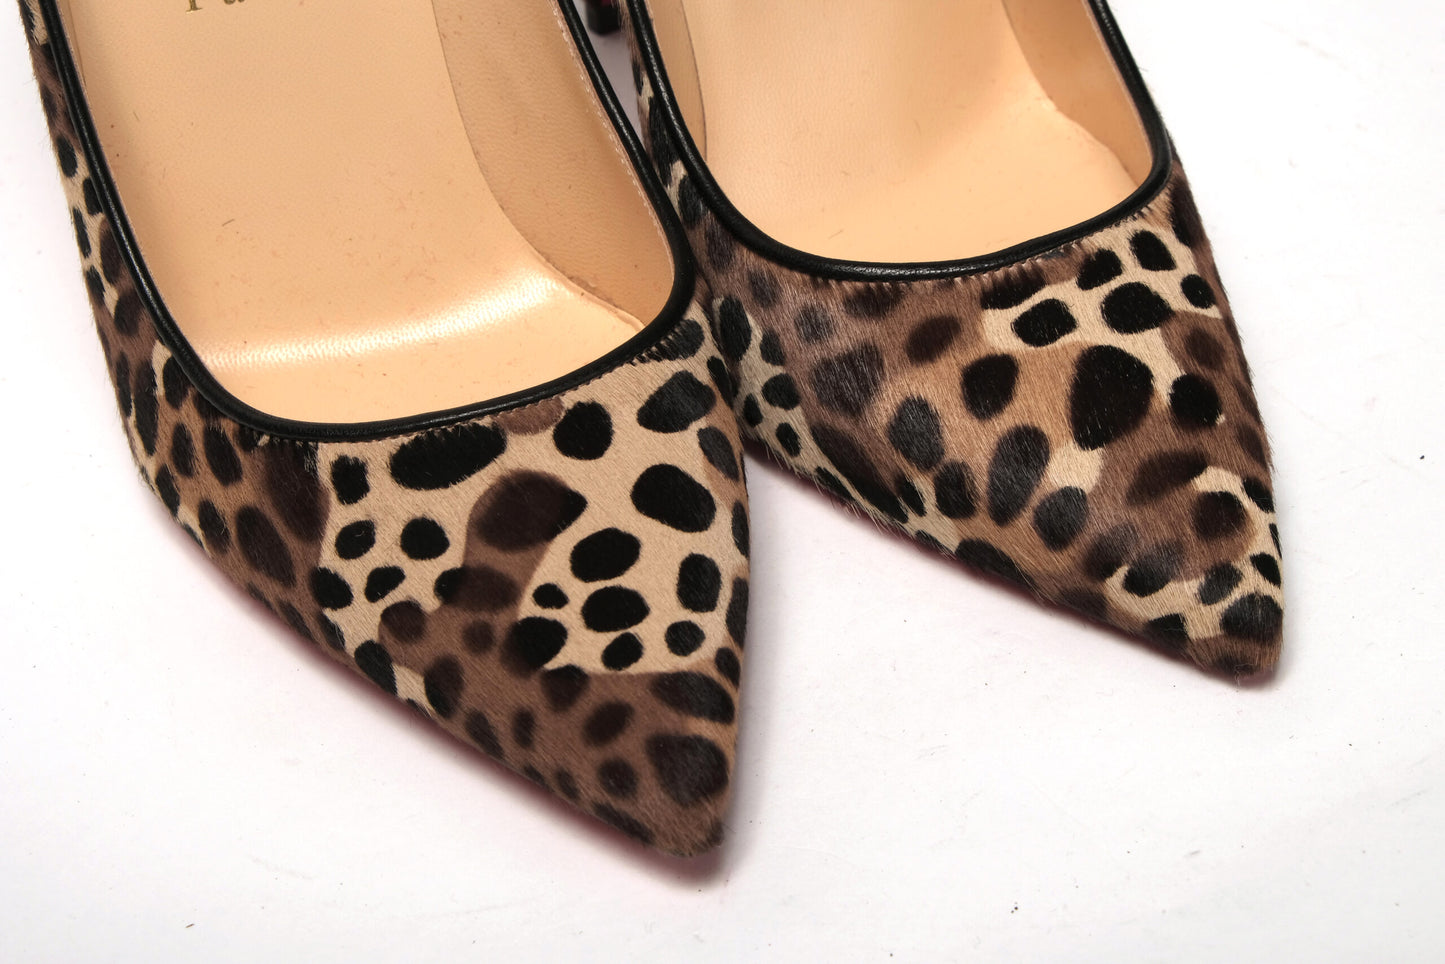 Leopard Kate 100 Pony Heels